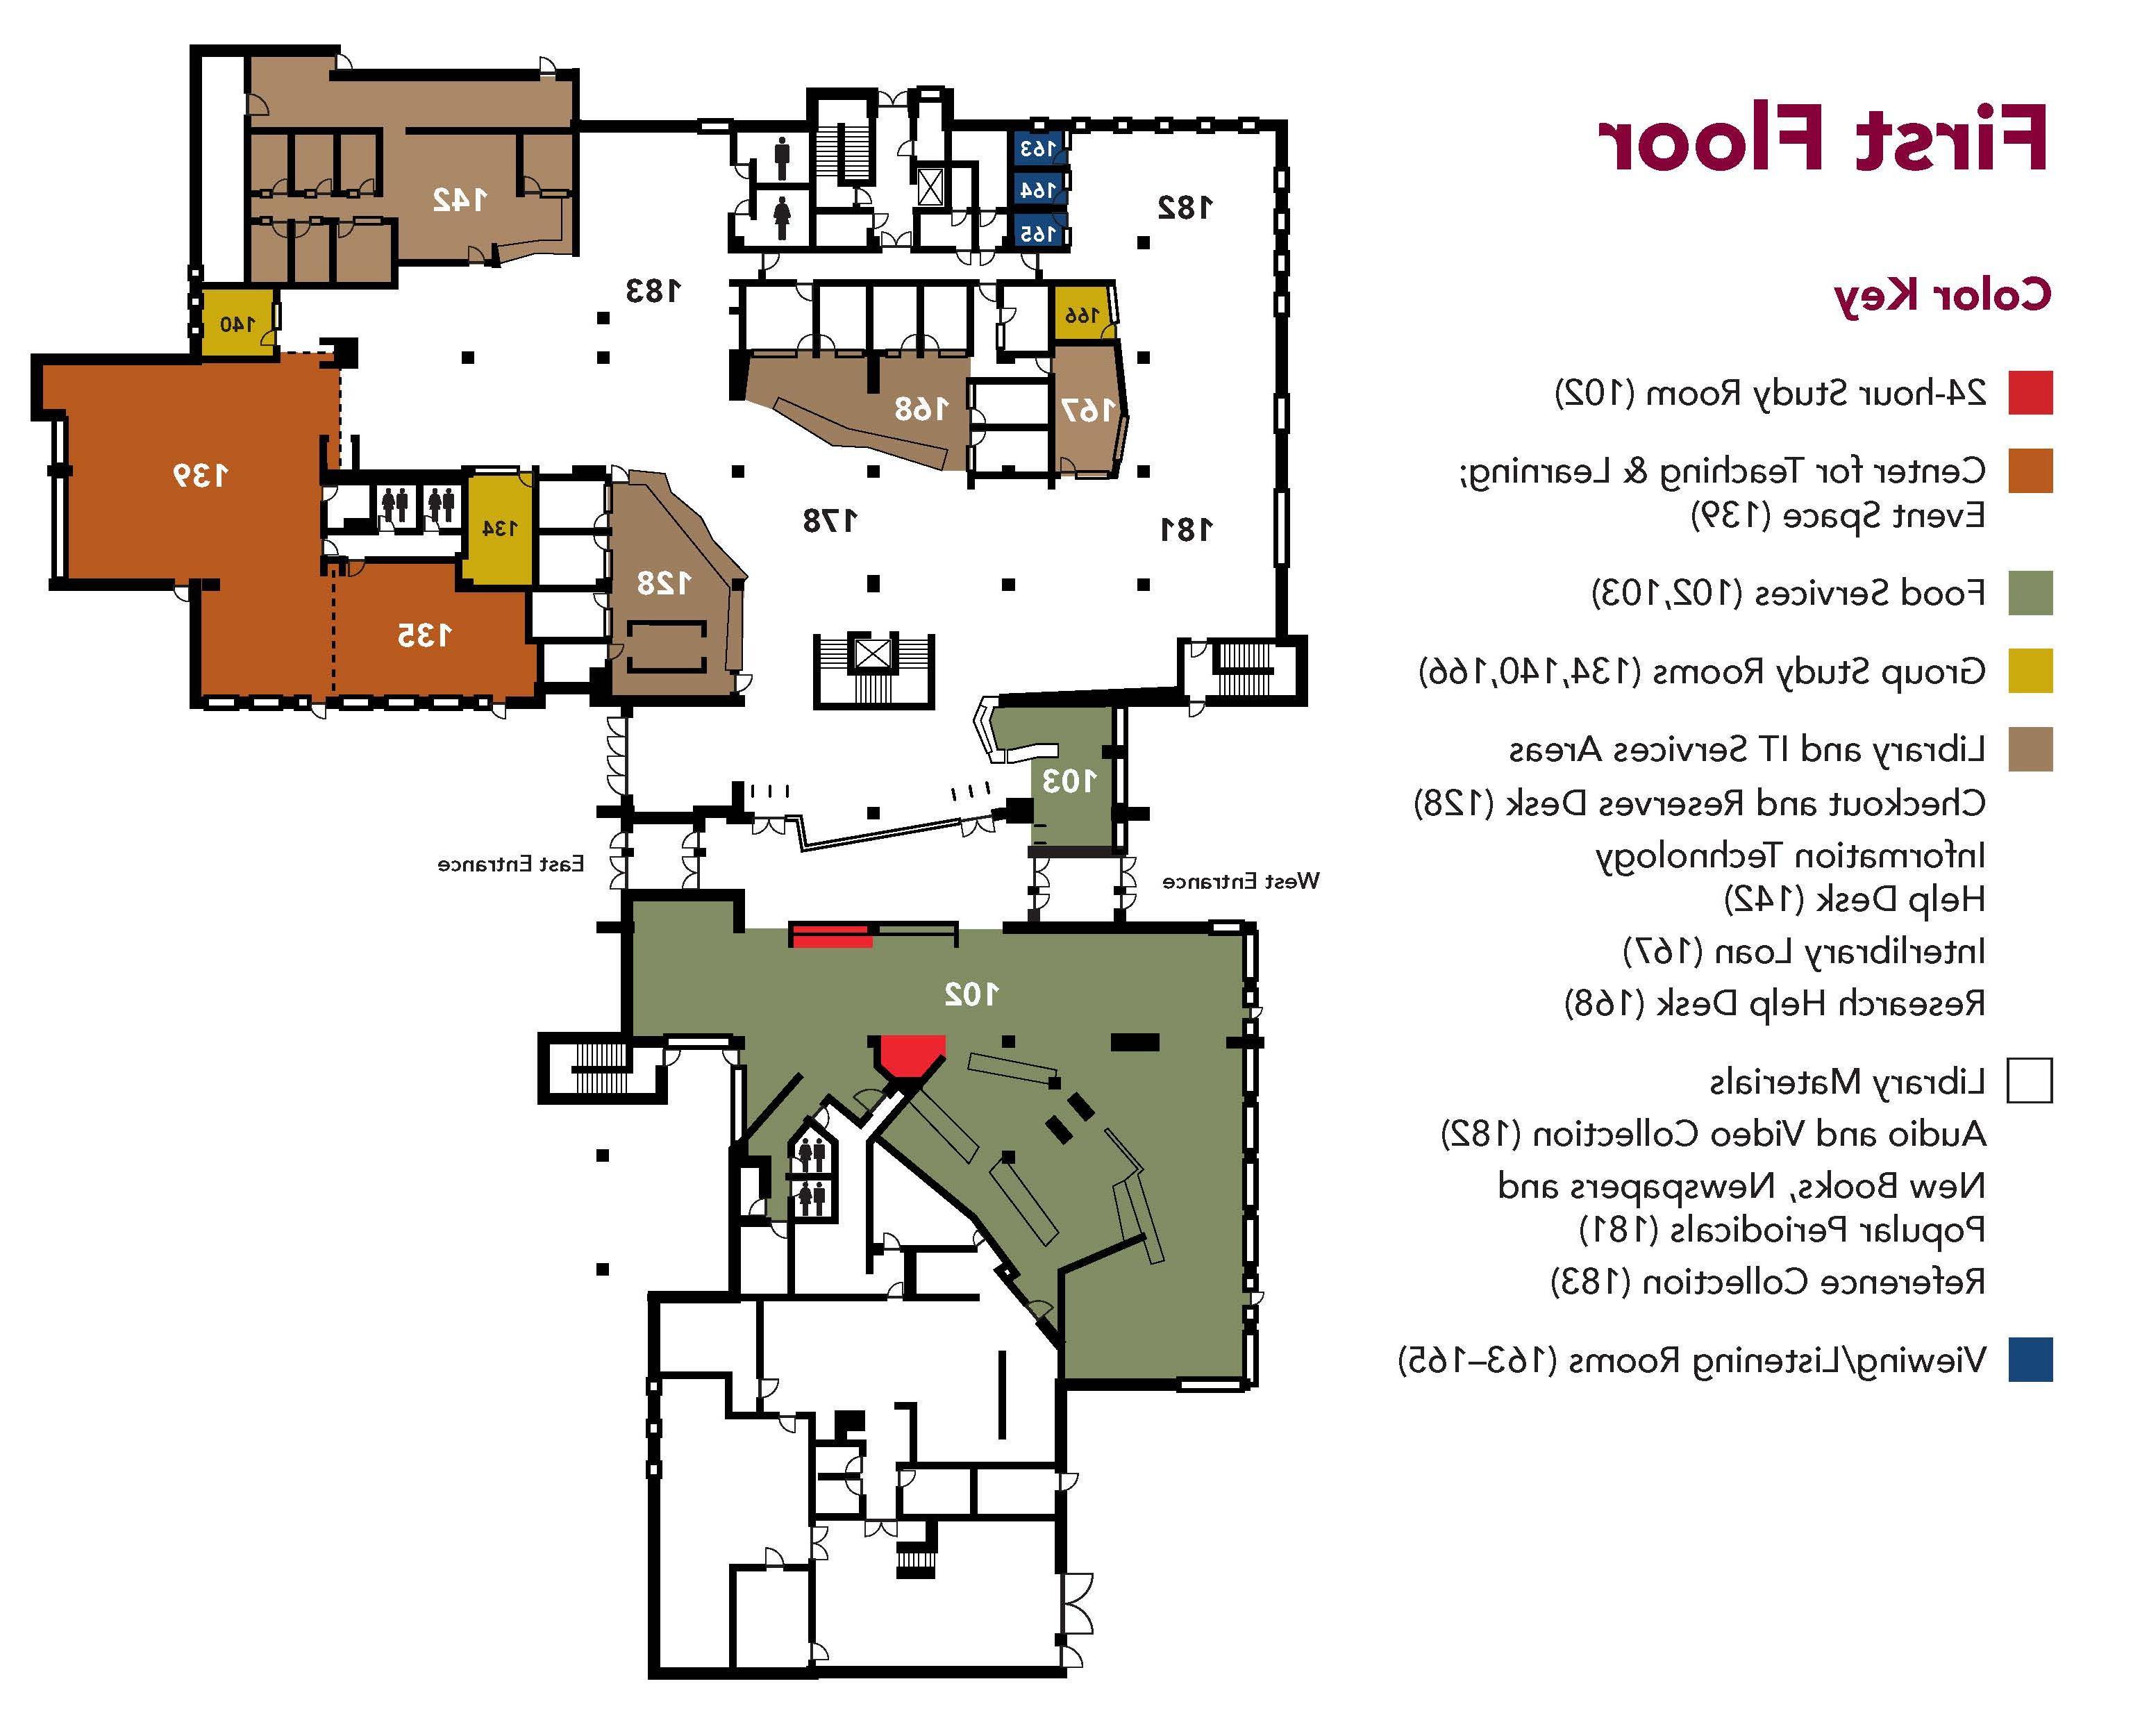 lib-map-first-floor.jpg